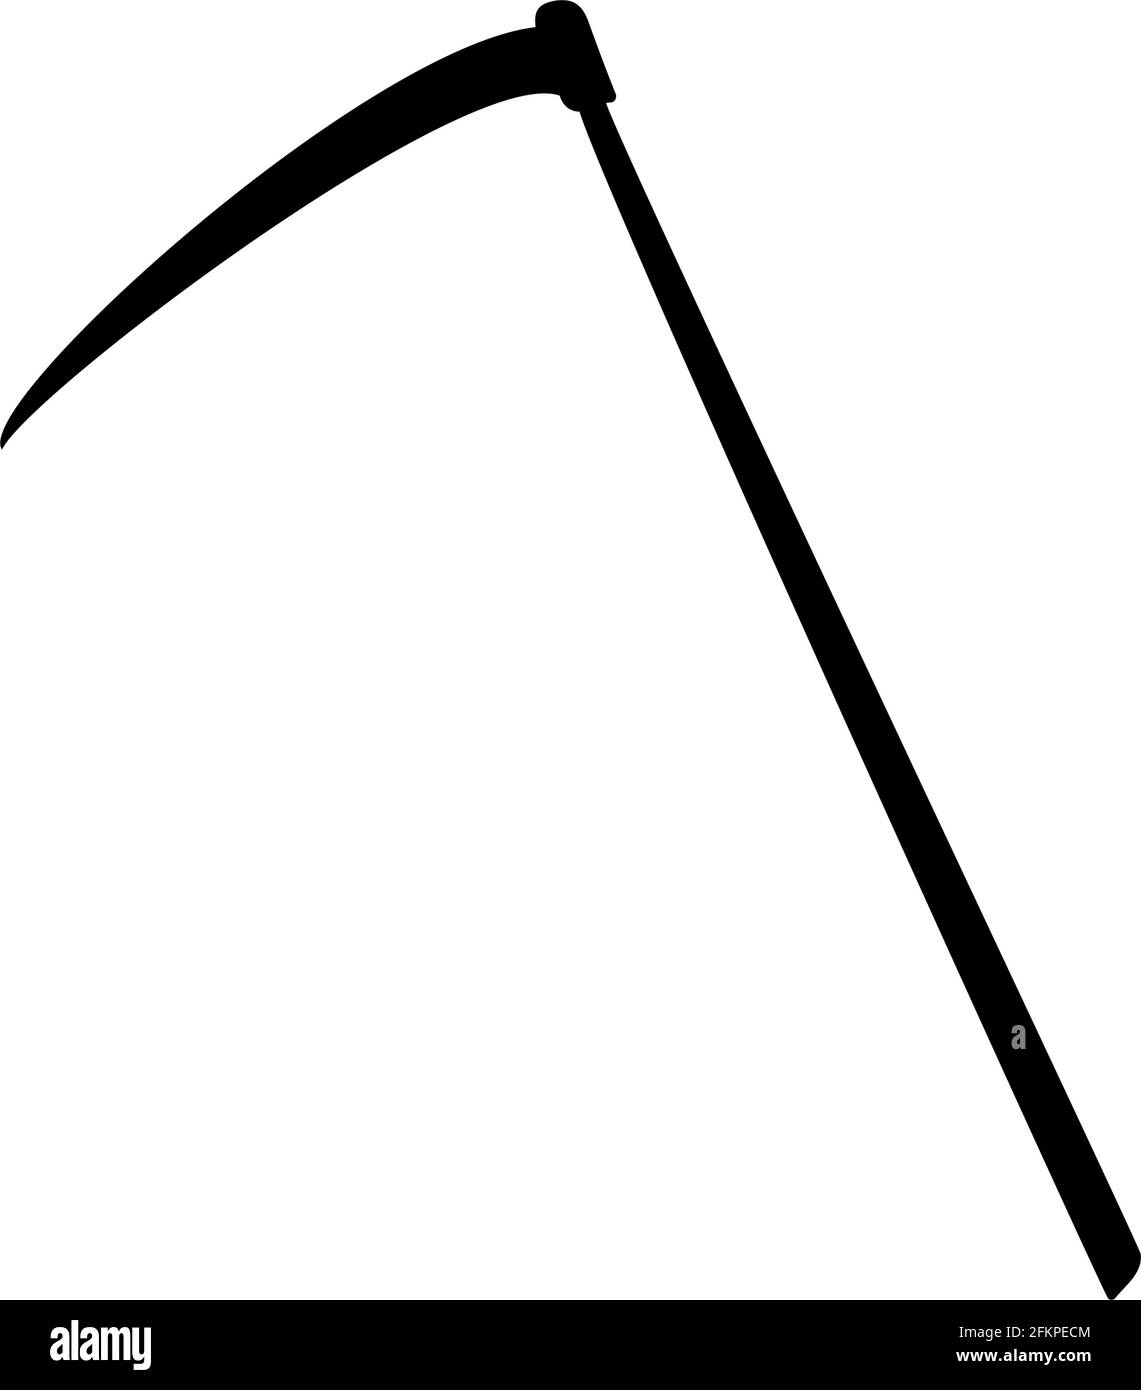 Black silhouette scythe image icon. Illustration graphics vector Stock Vector